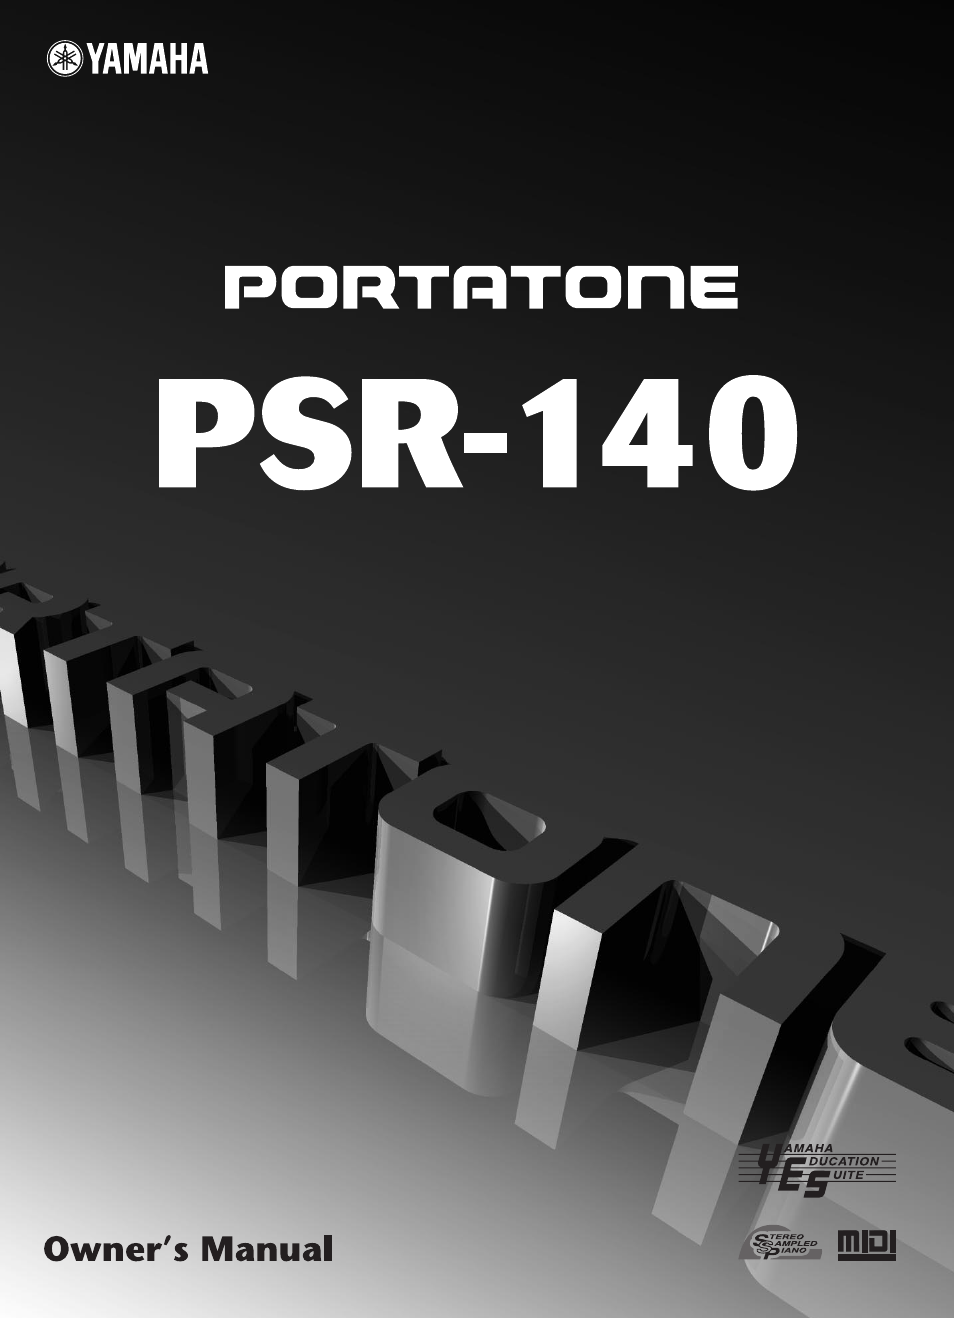 high-quality stereo amplifier/speaker system PSR-140